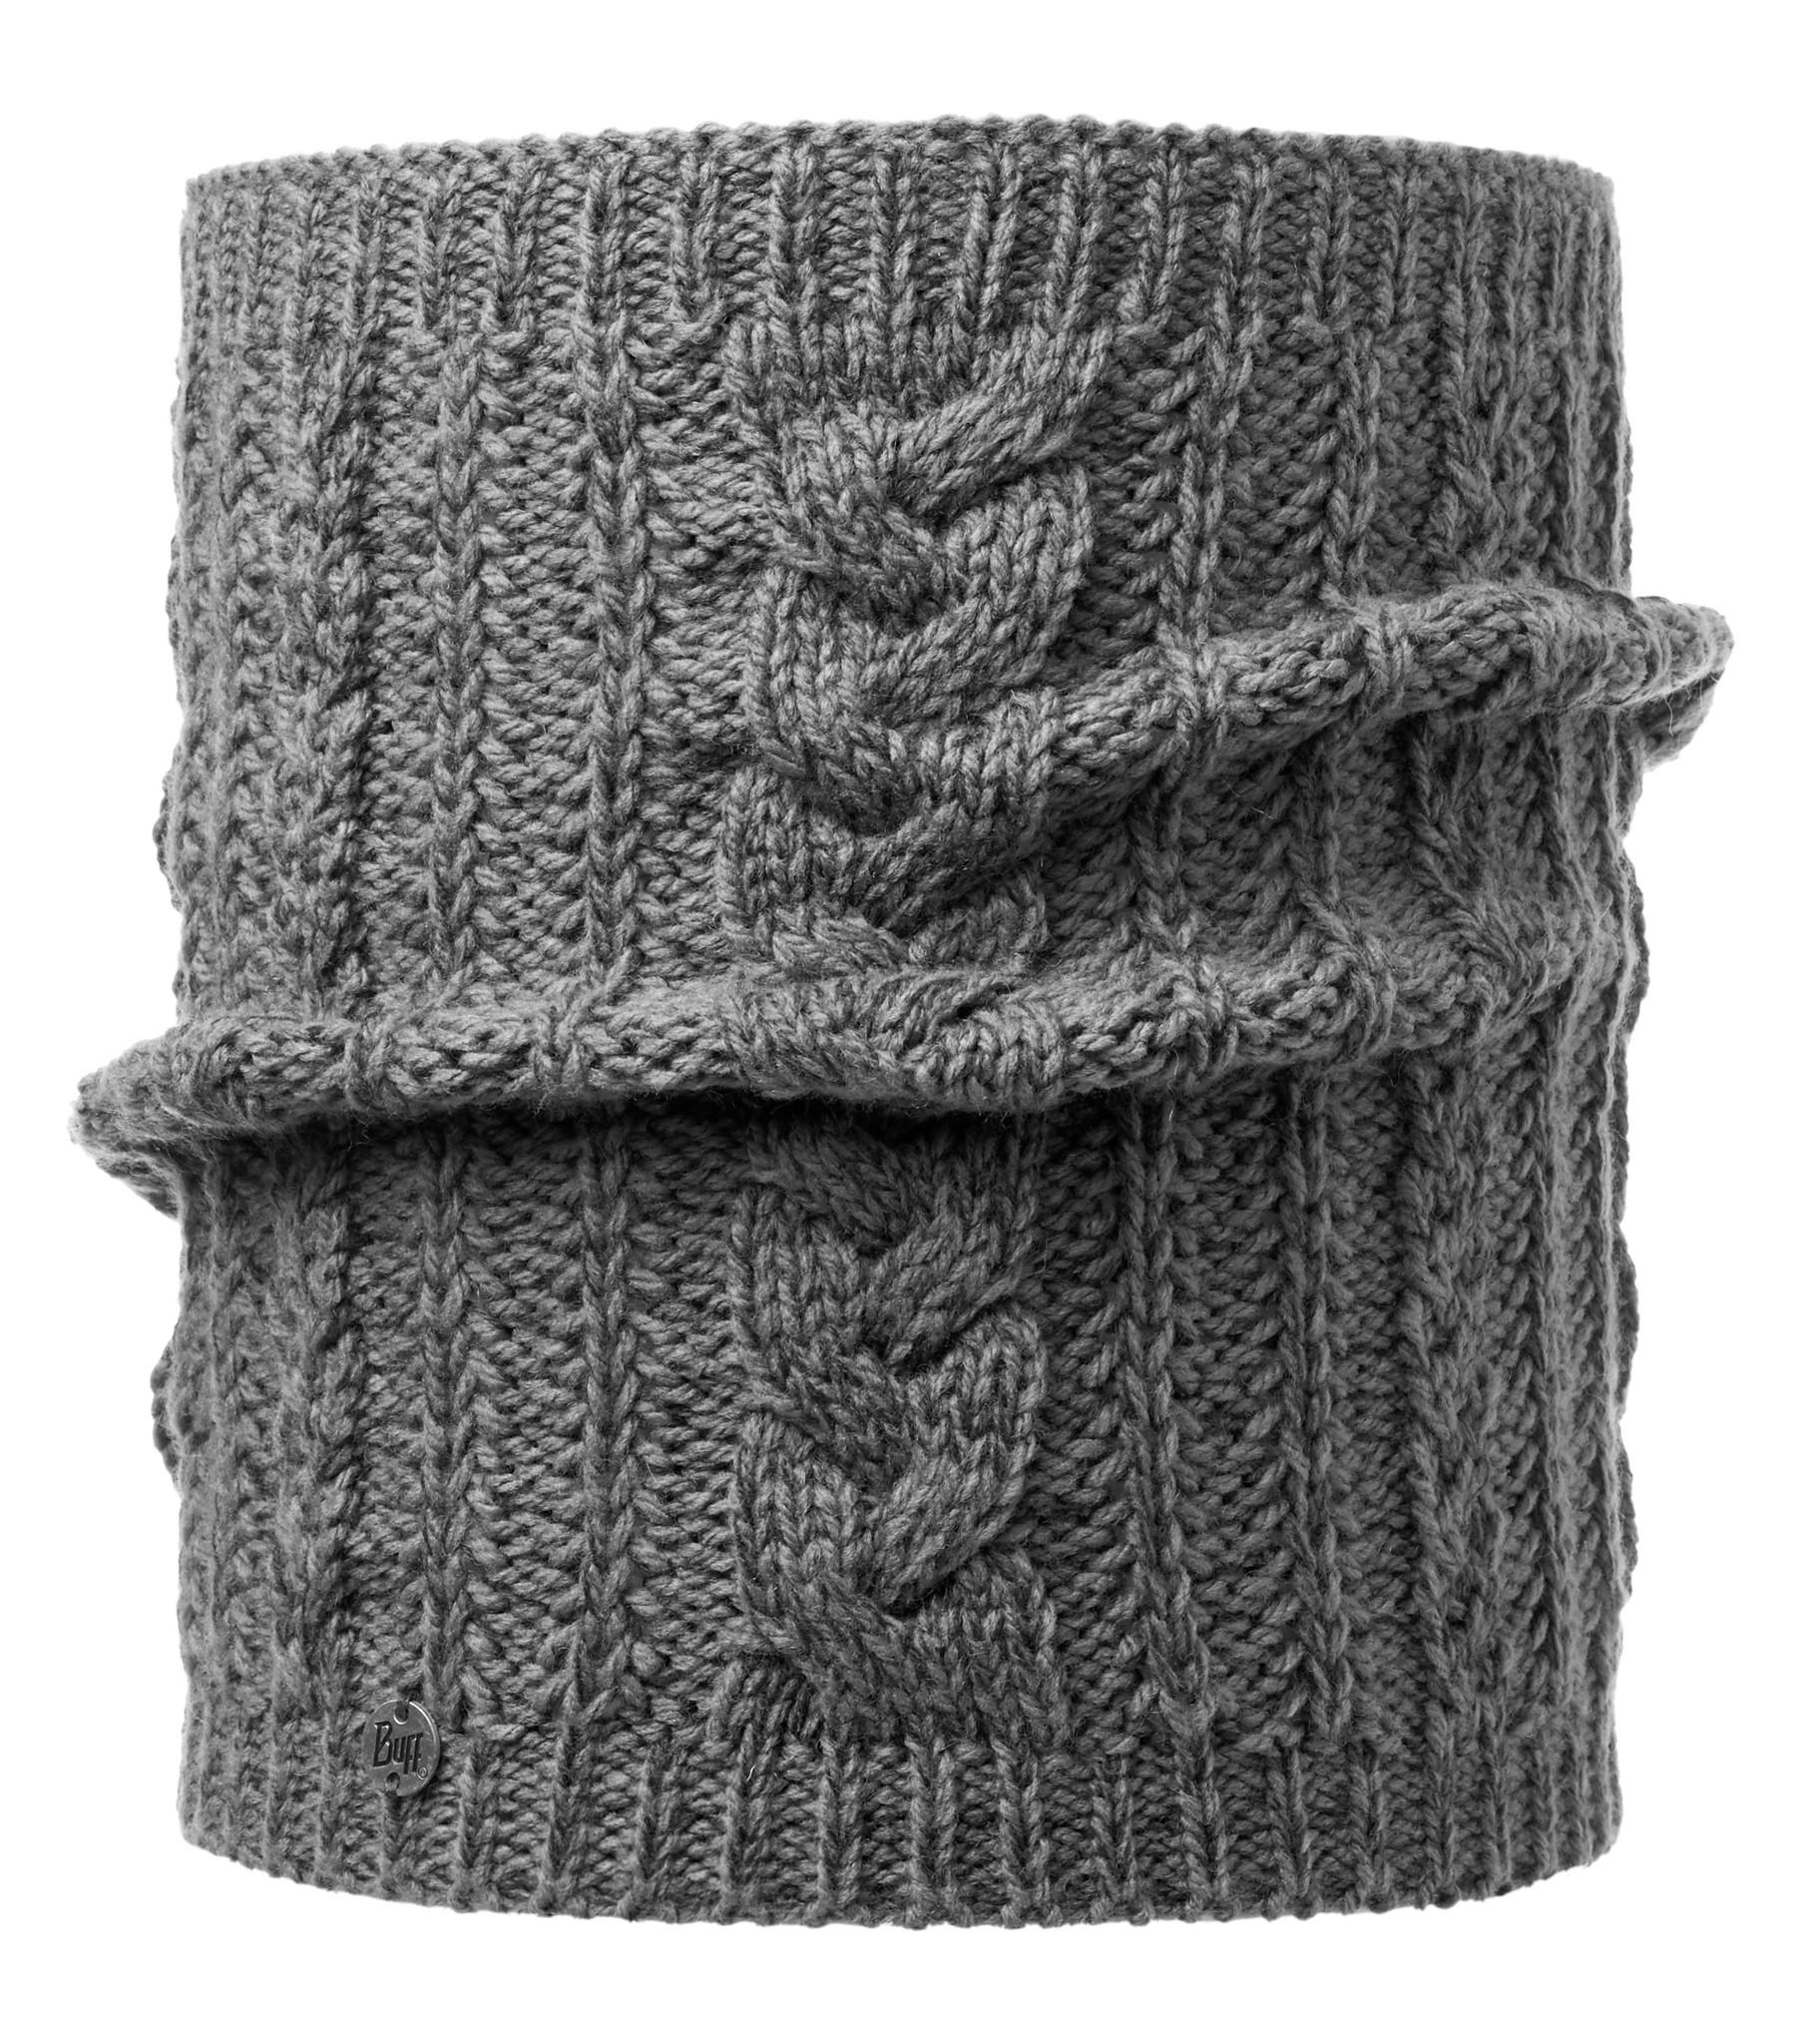 Шарф Buff Knitted neckwarmer comfort darla grey pewter - фото 1